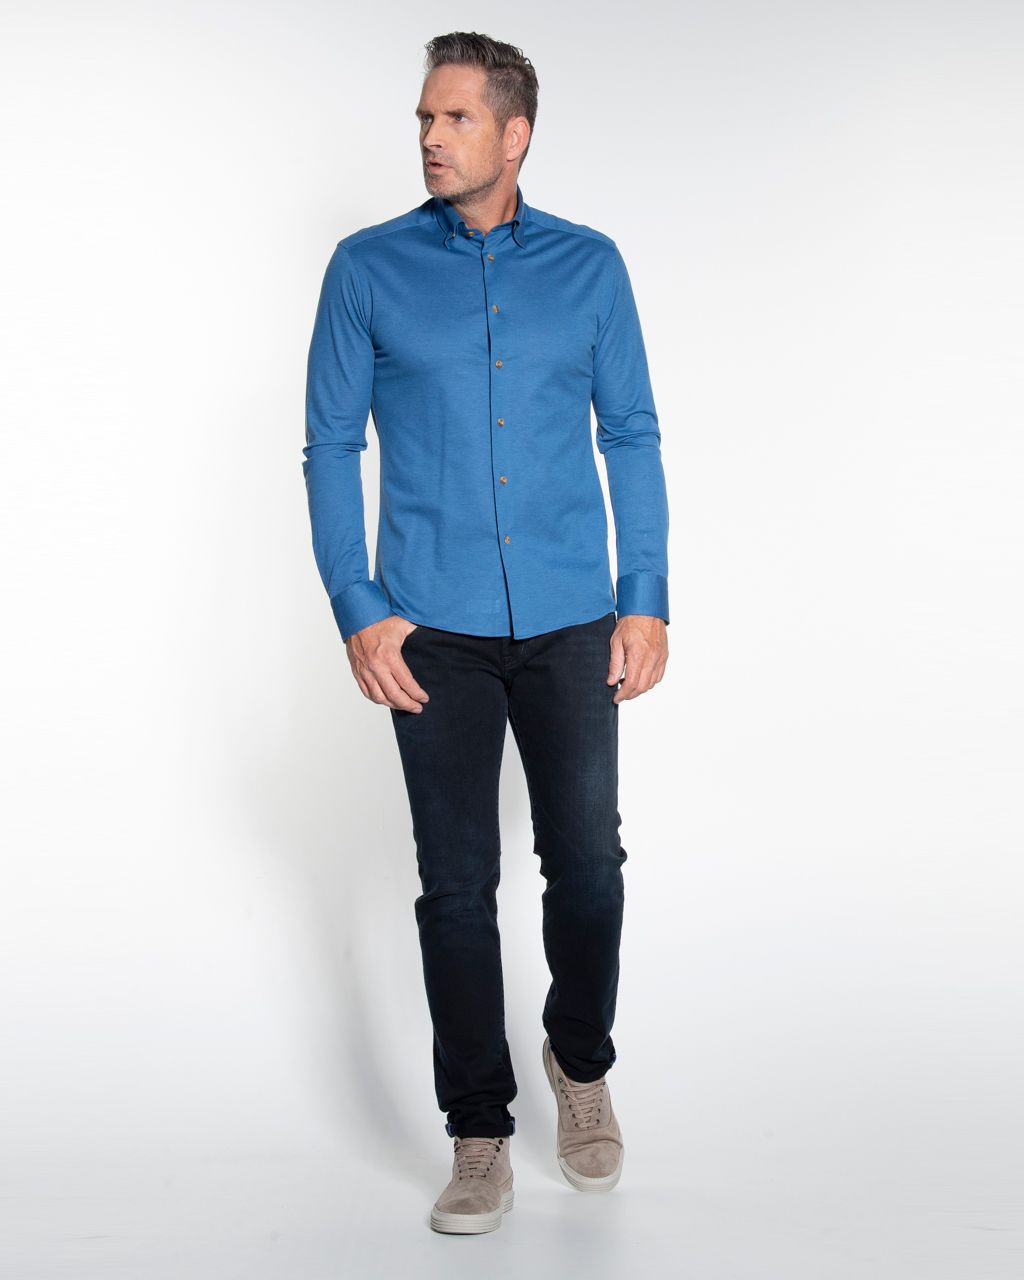 ETON Overhemd LM Blauw 053059-001-L